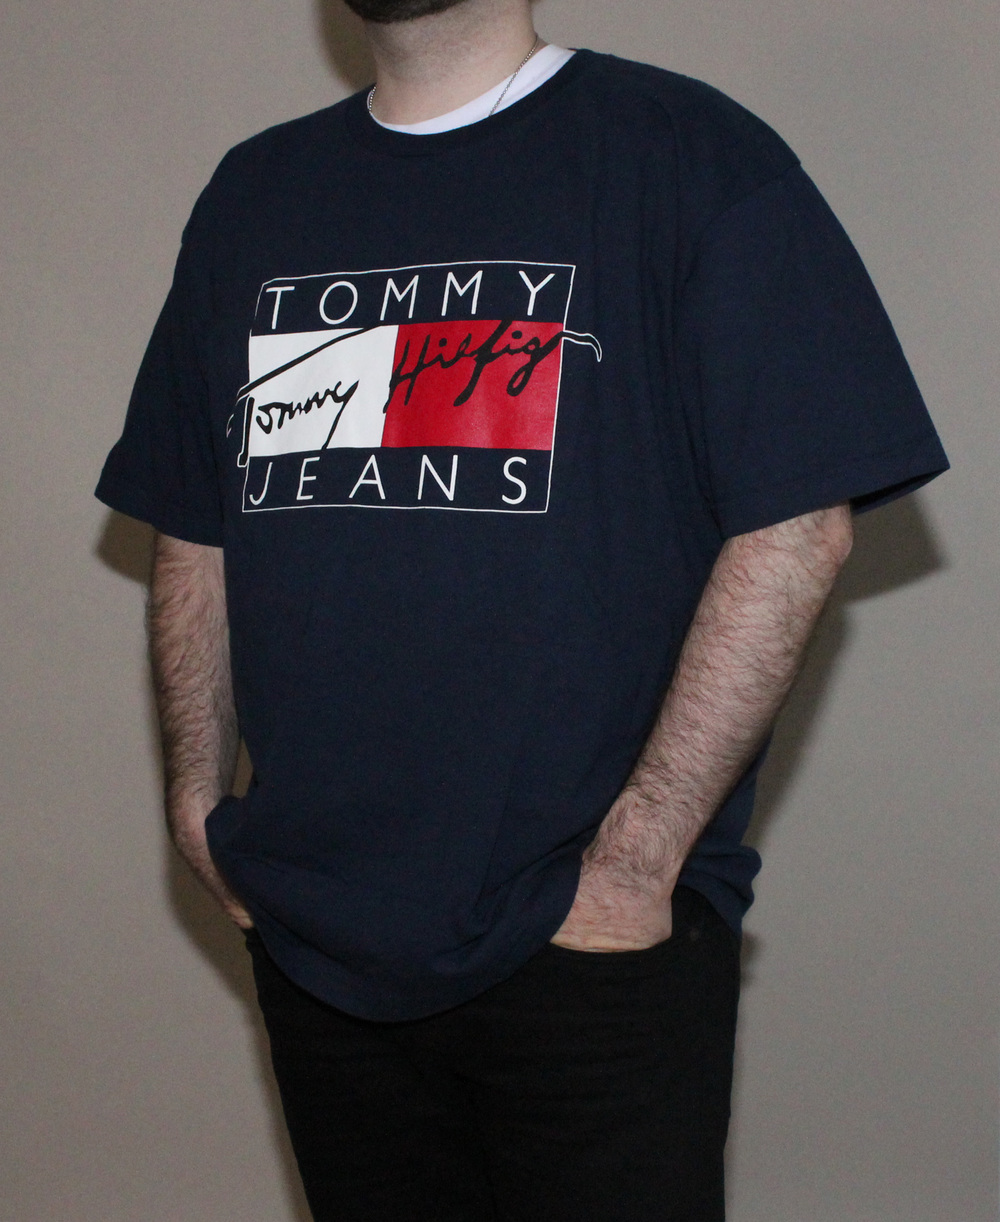 logo tommy hilfiger t shirt